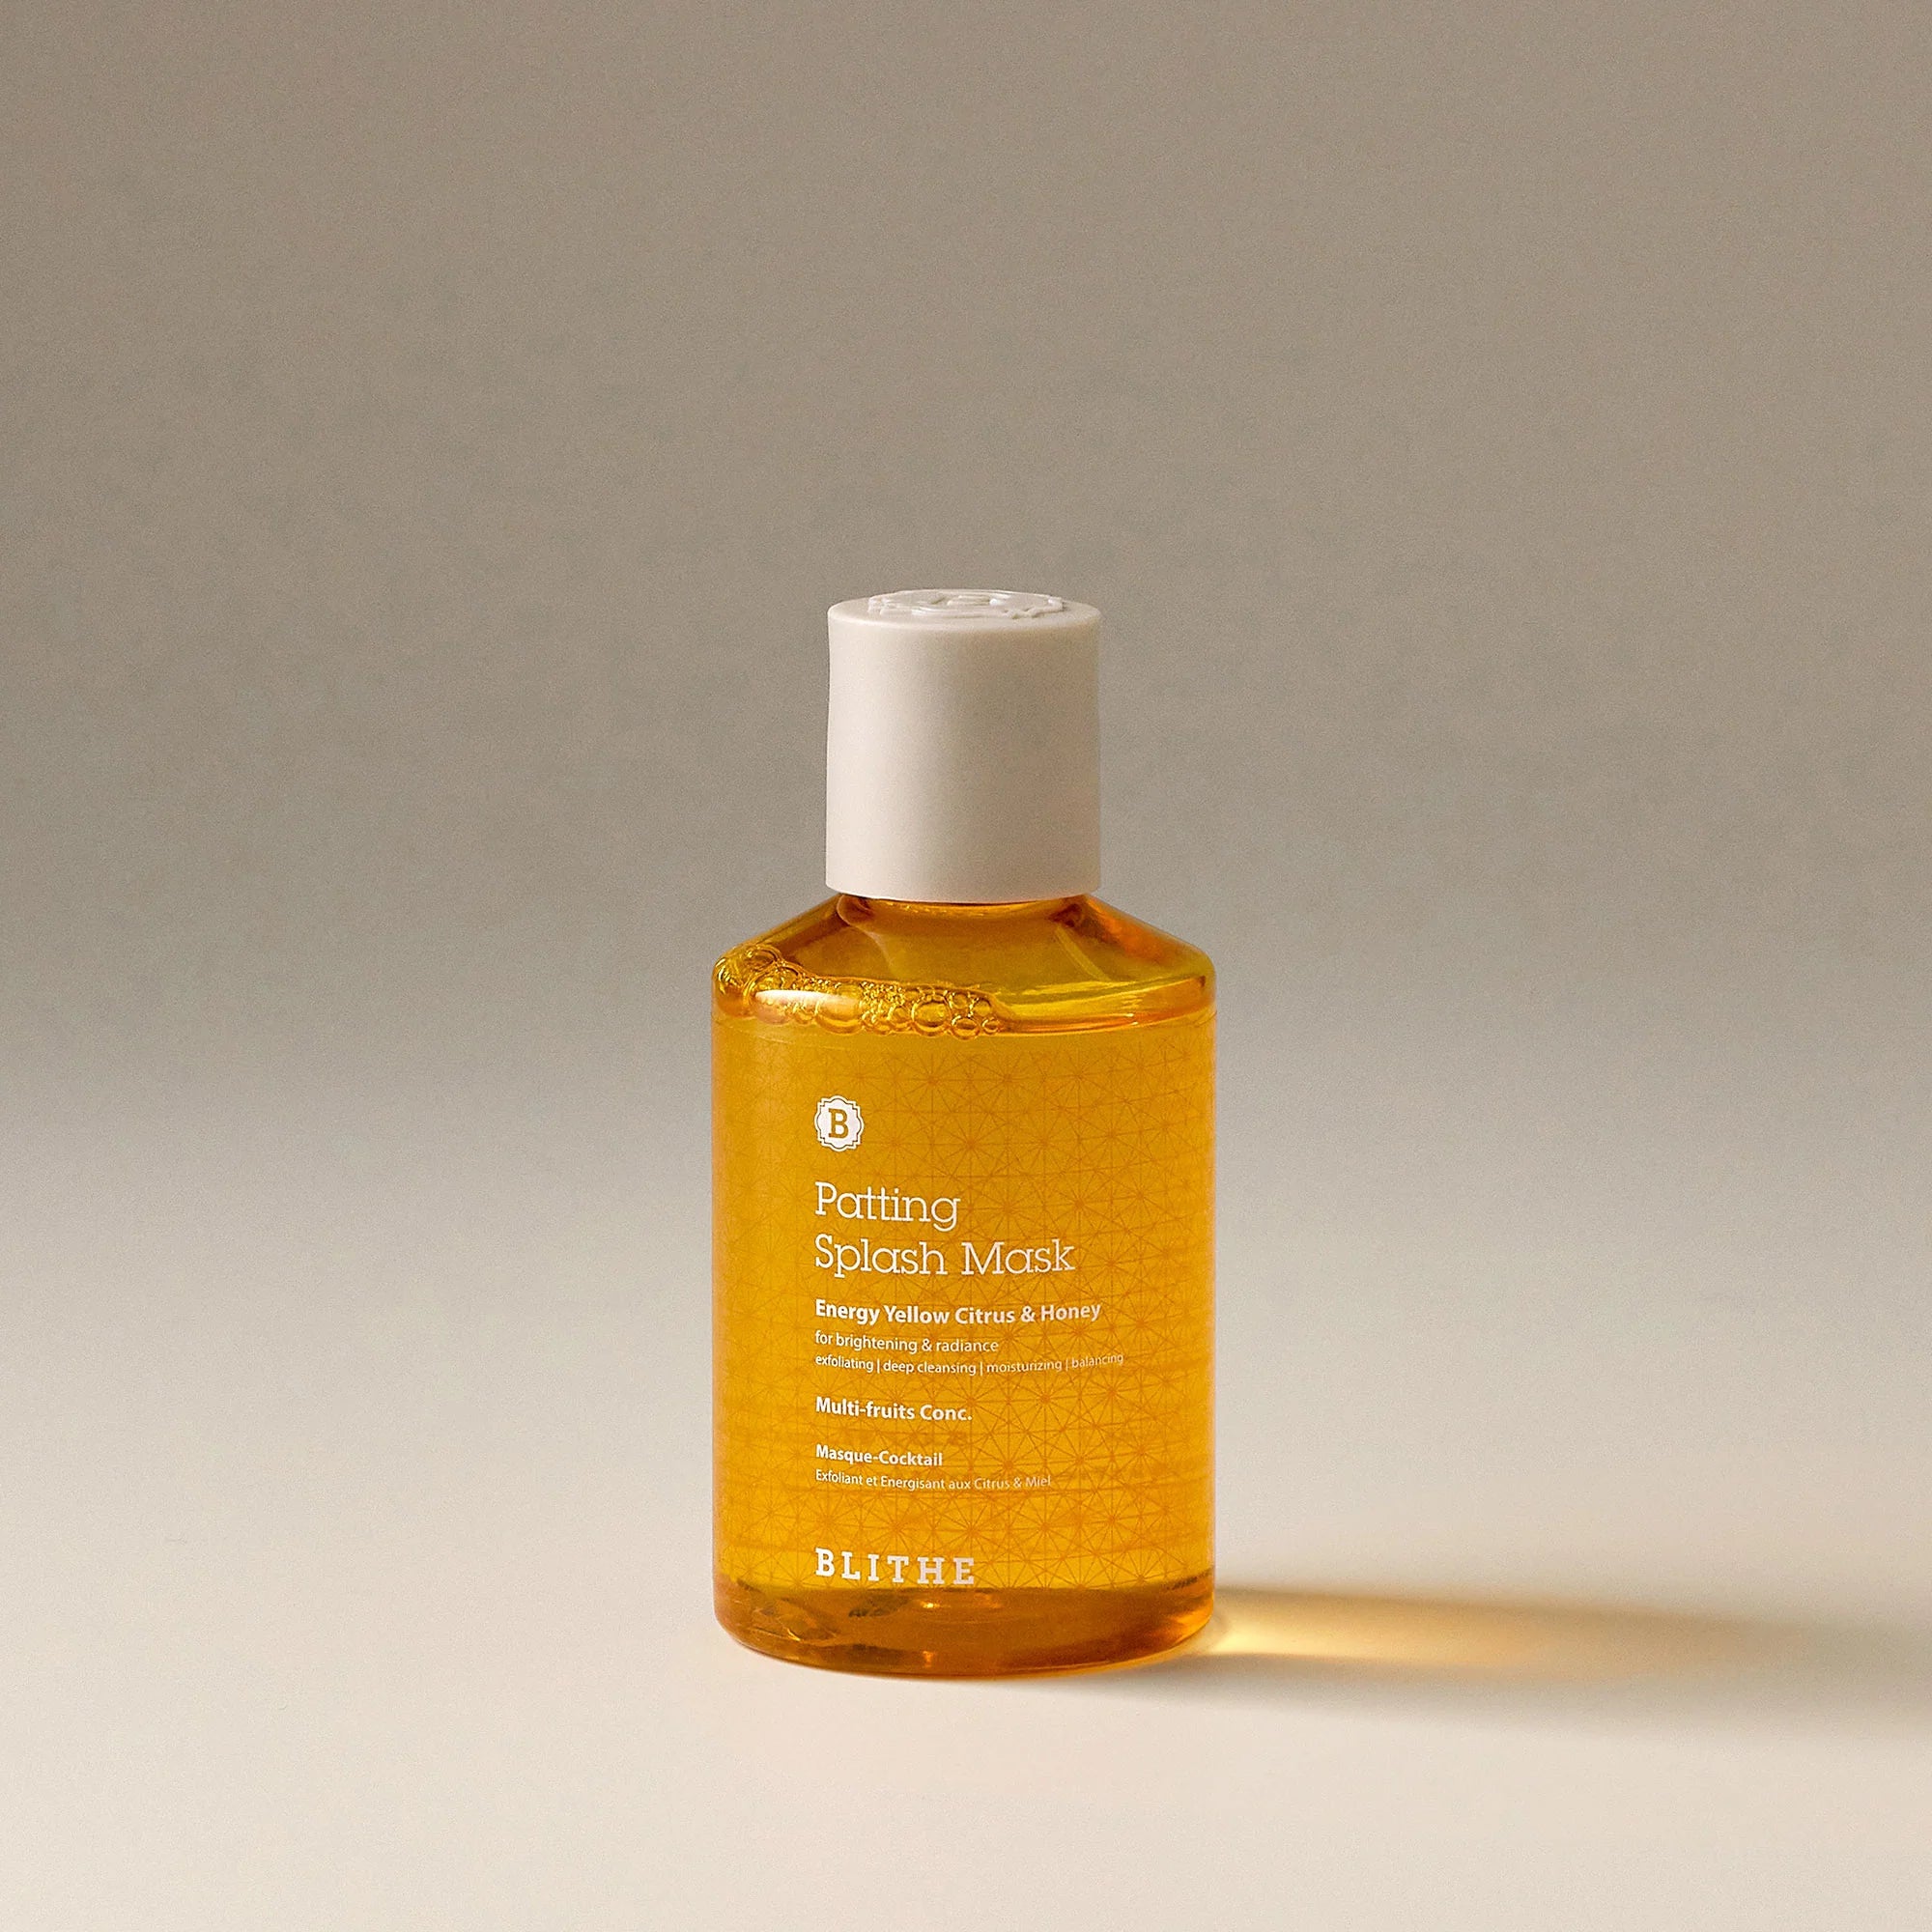 Blithe Cosmetics’ Patting Splash Mask in an orange bottle